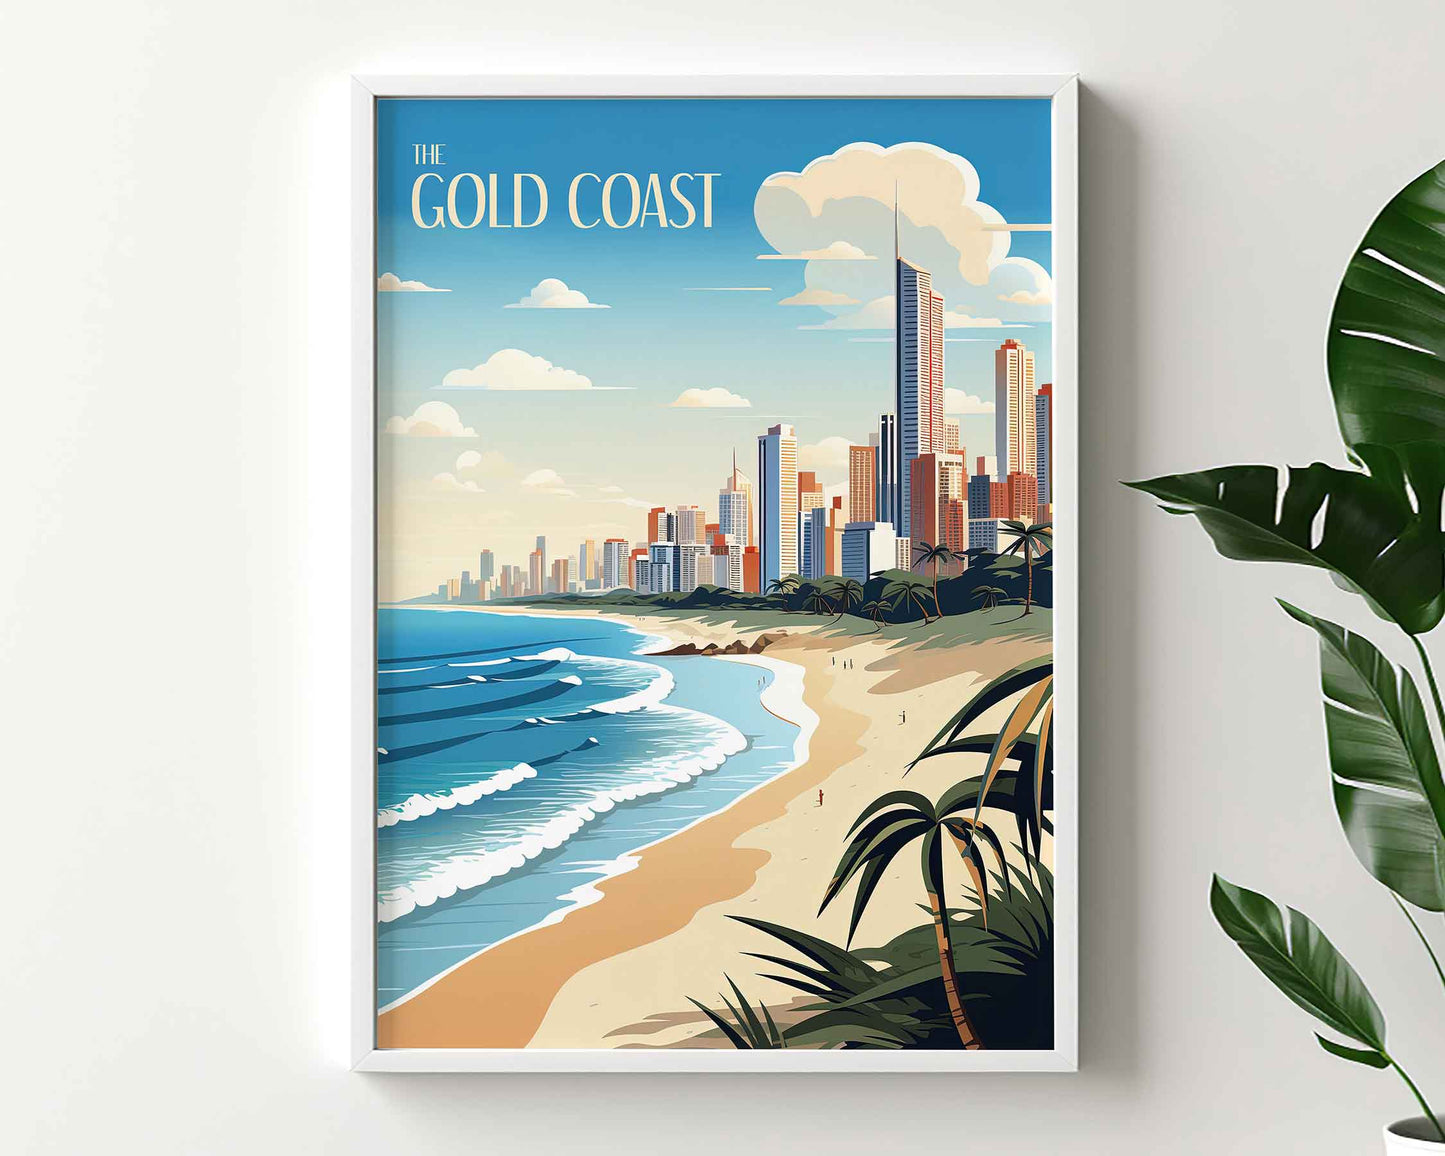 Framed Image of Gold Coast Australia Wall Art Print Travel Posters Illustration